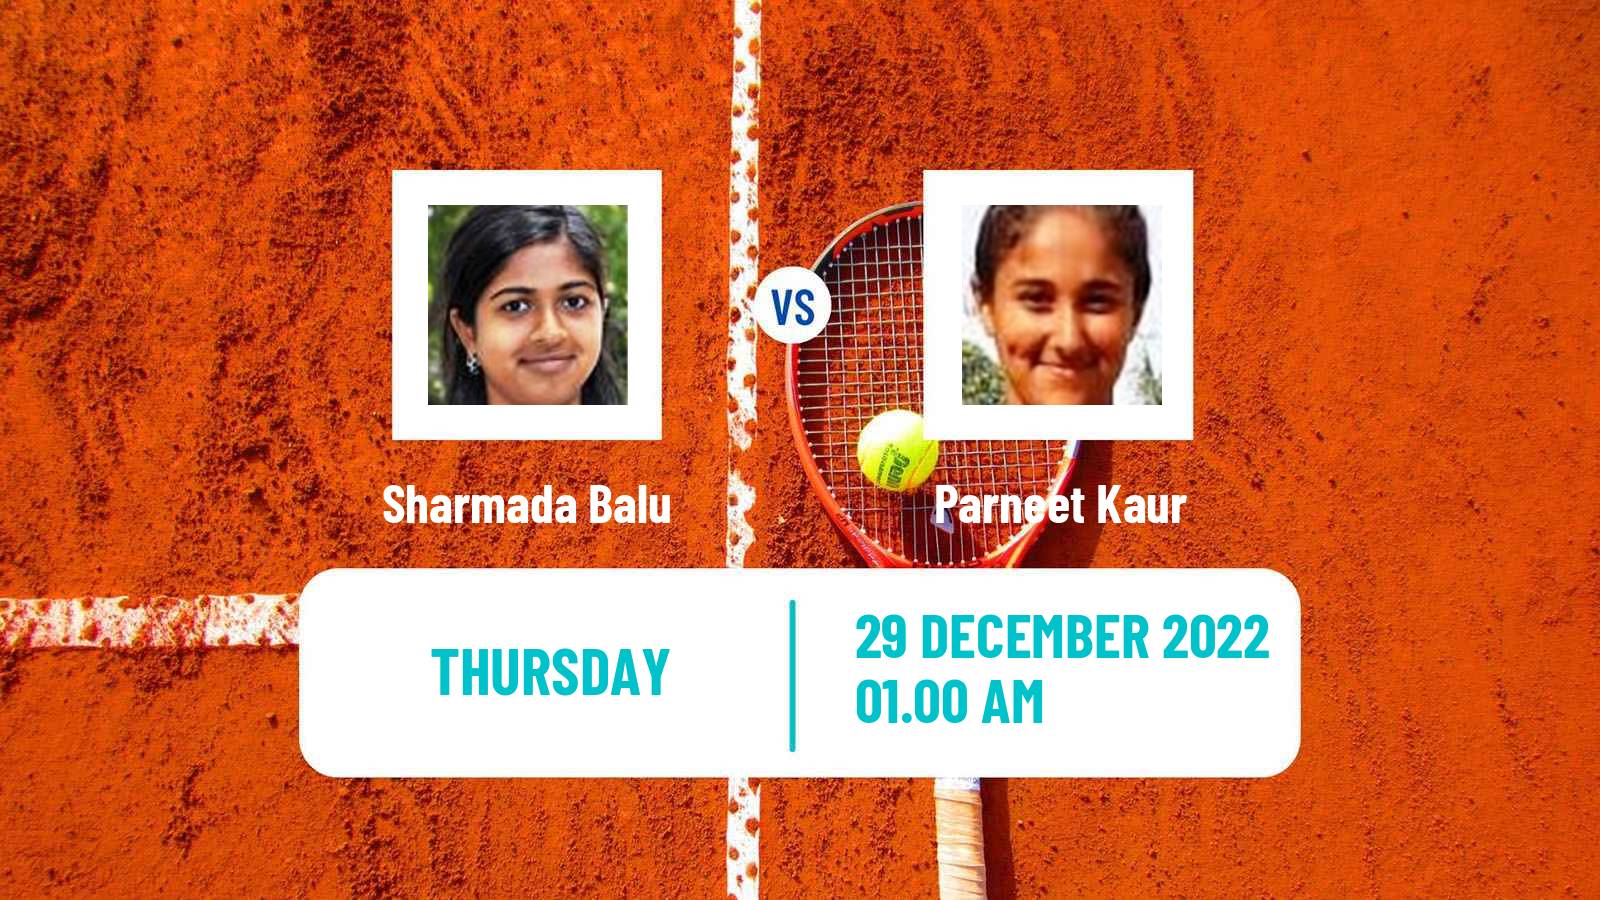 Tennis ITF Tournaments Sharmada Balu - Parneet Kaur